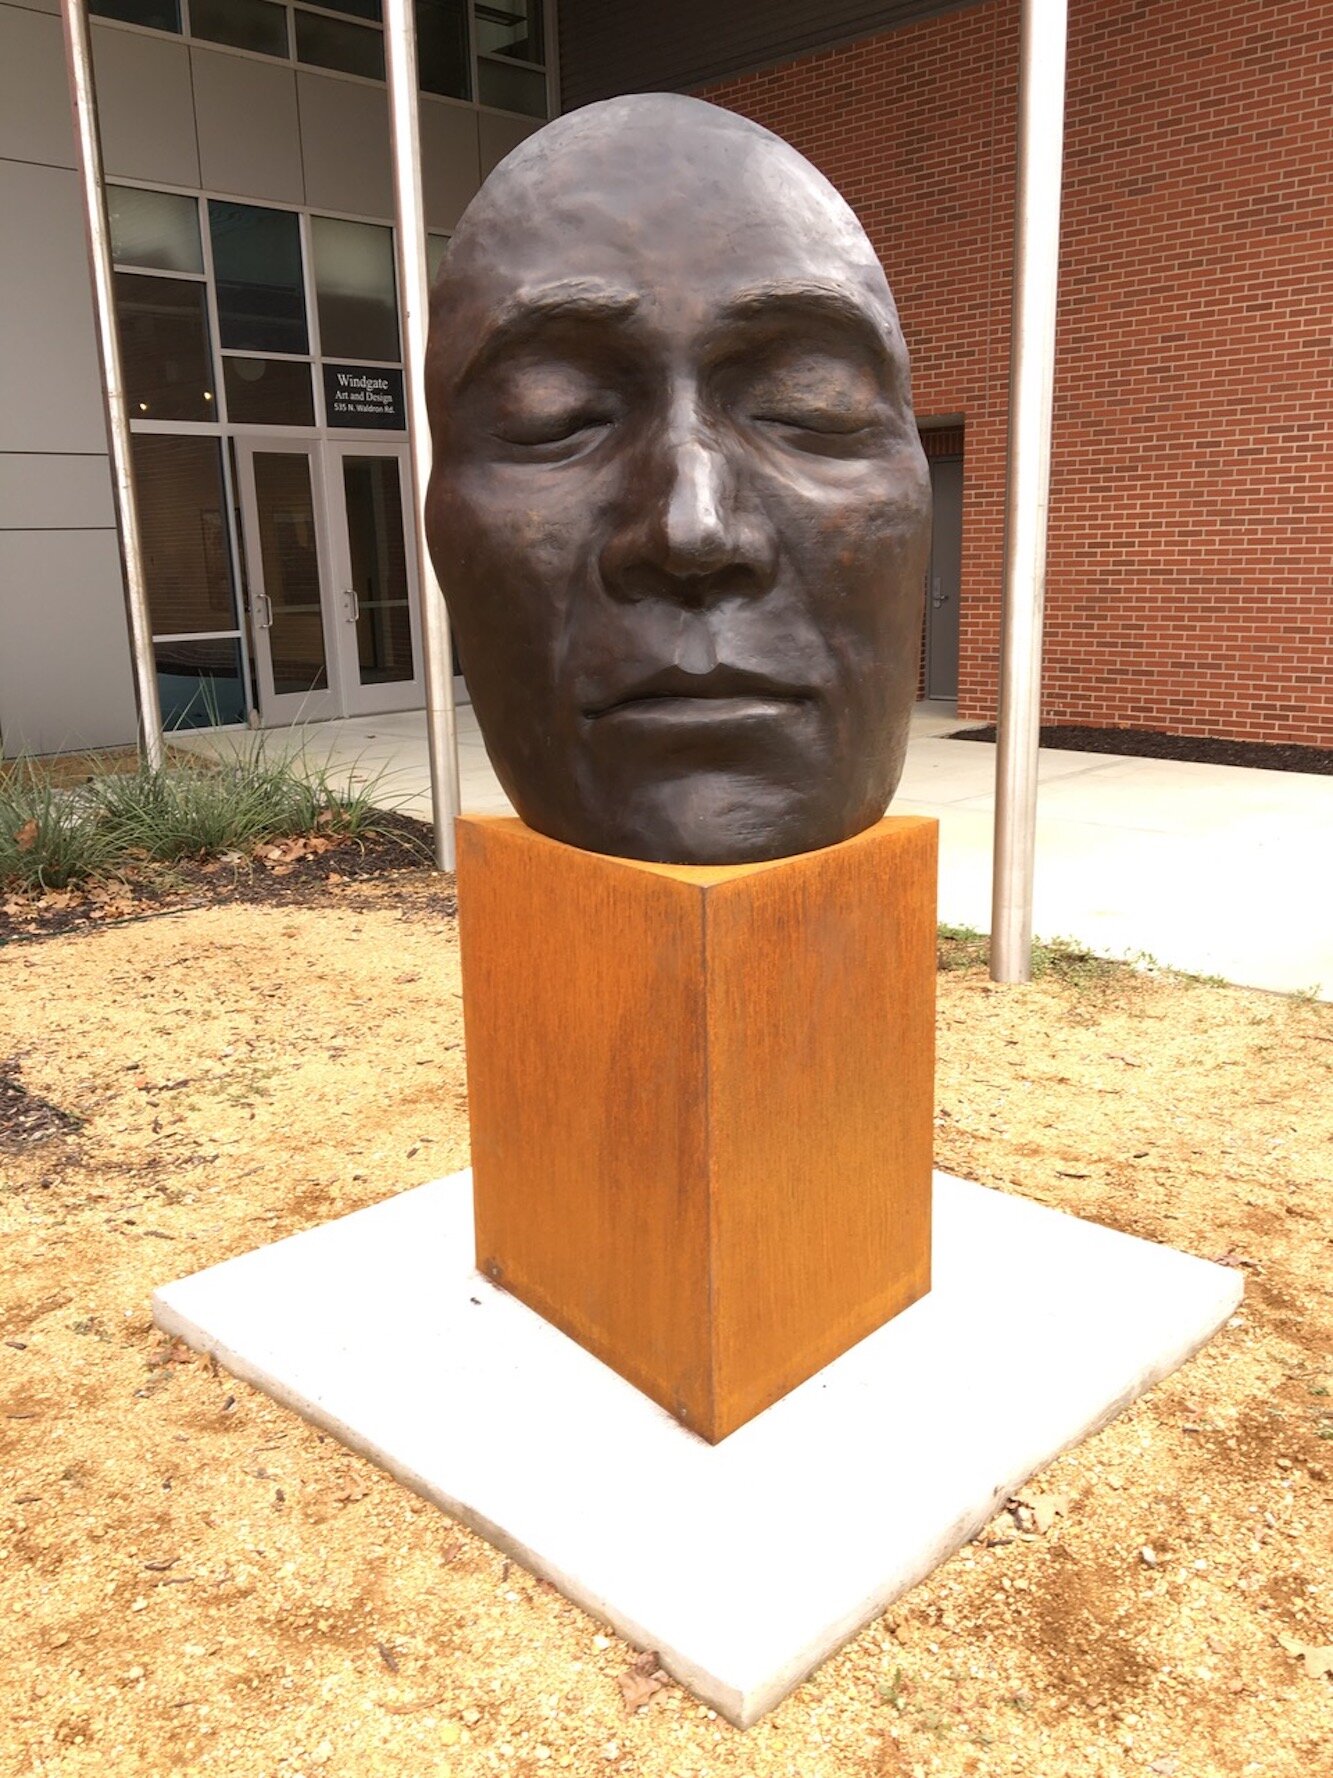   Vision , 7’ x 3’ x 3’, bronze, cor-ten steel, gold leaf, the Windgate Center of Art + Design, University of Arkansas at Fort Smith, 2019 